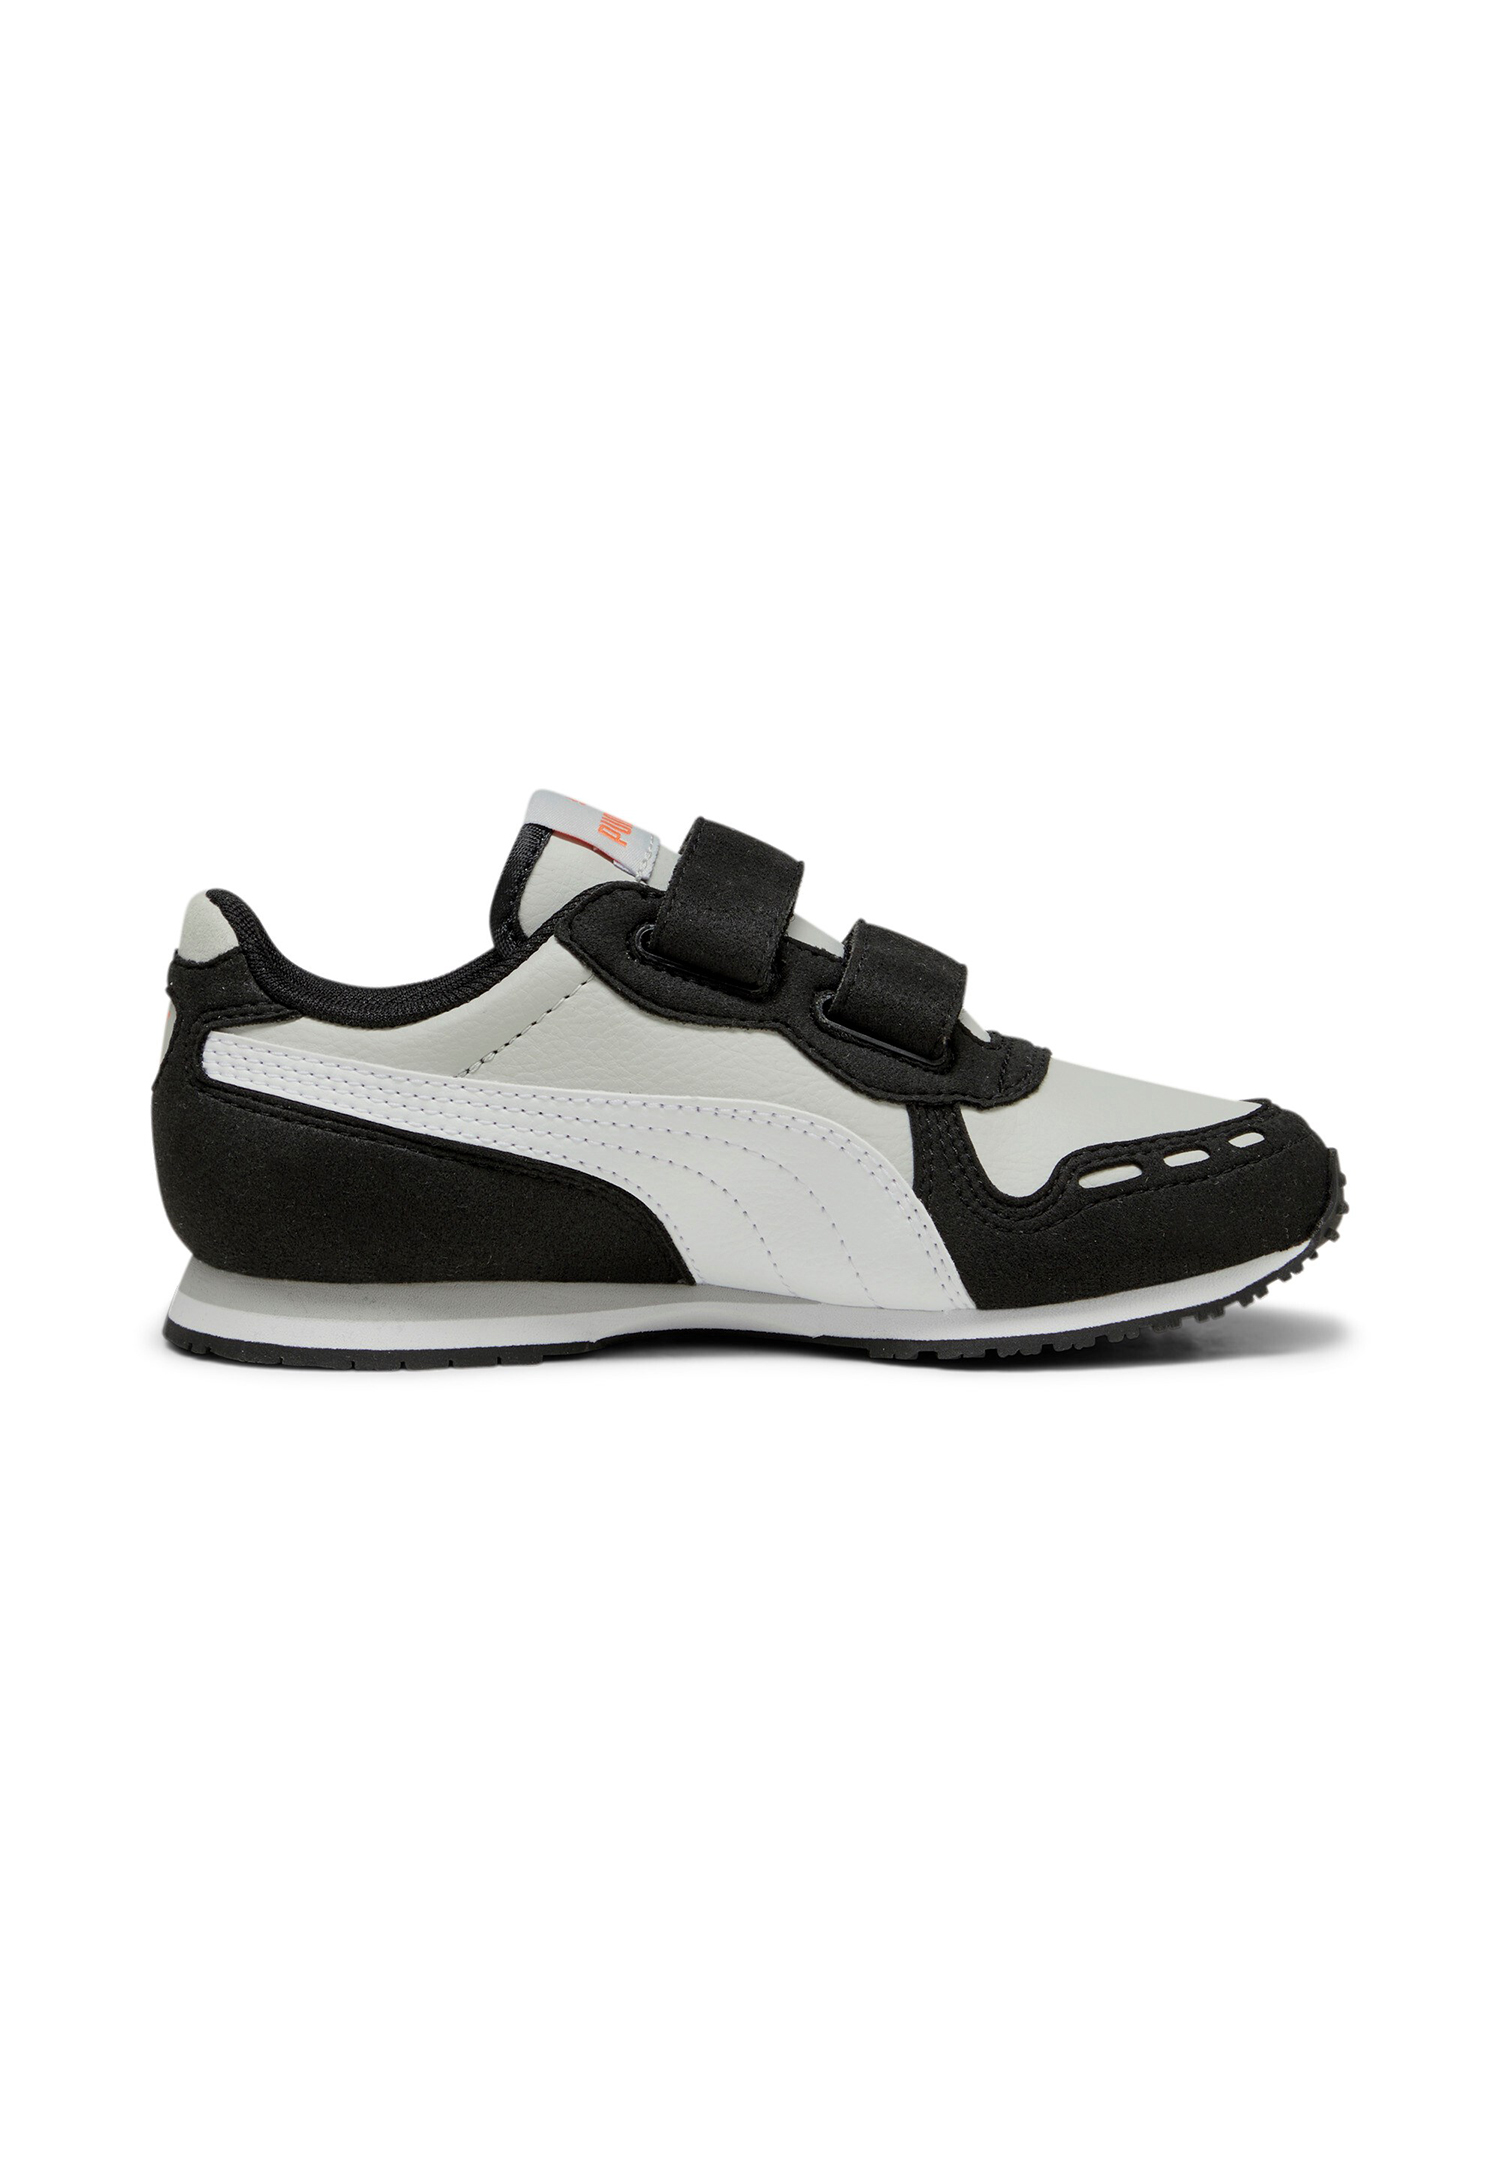 PUMA Cabana Racer SL  20 V PS Kinder Unisex Sneaker Turnschuhe 383730 Grau